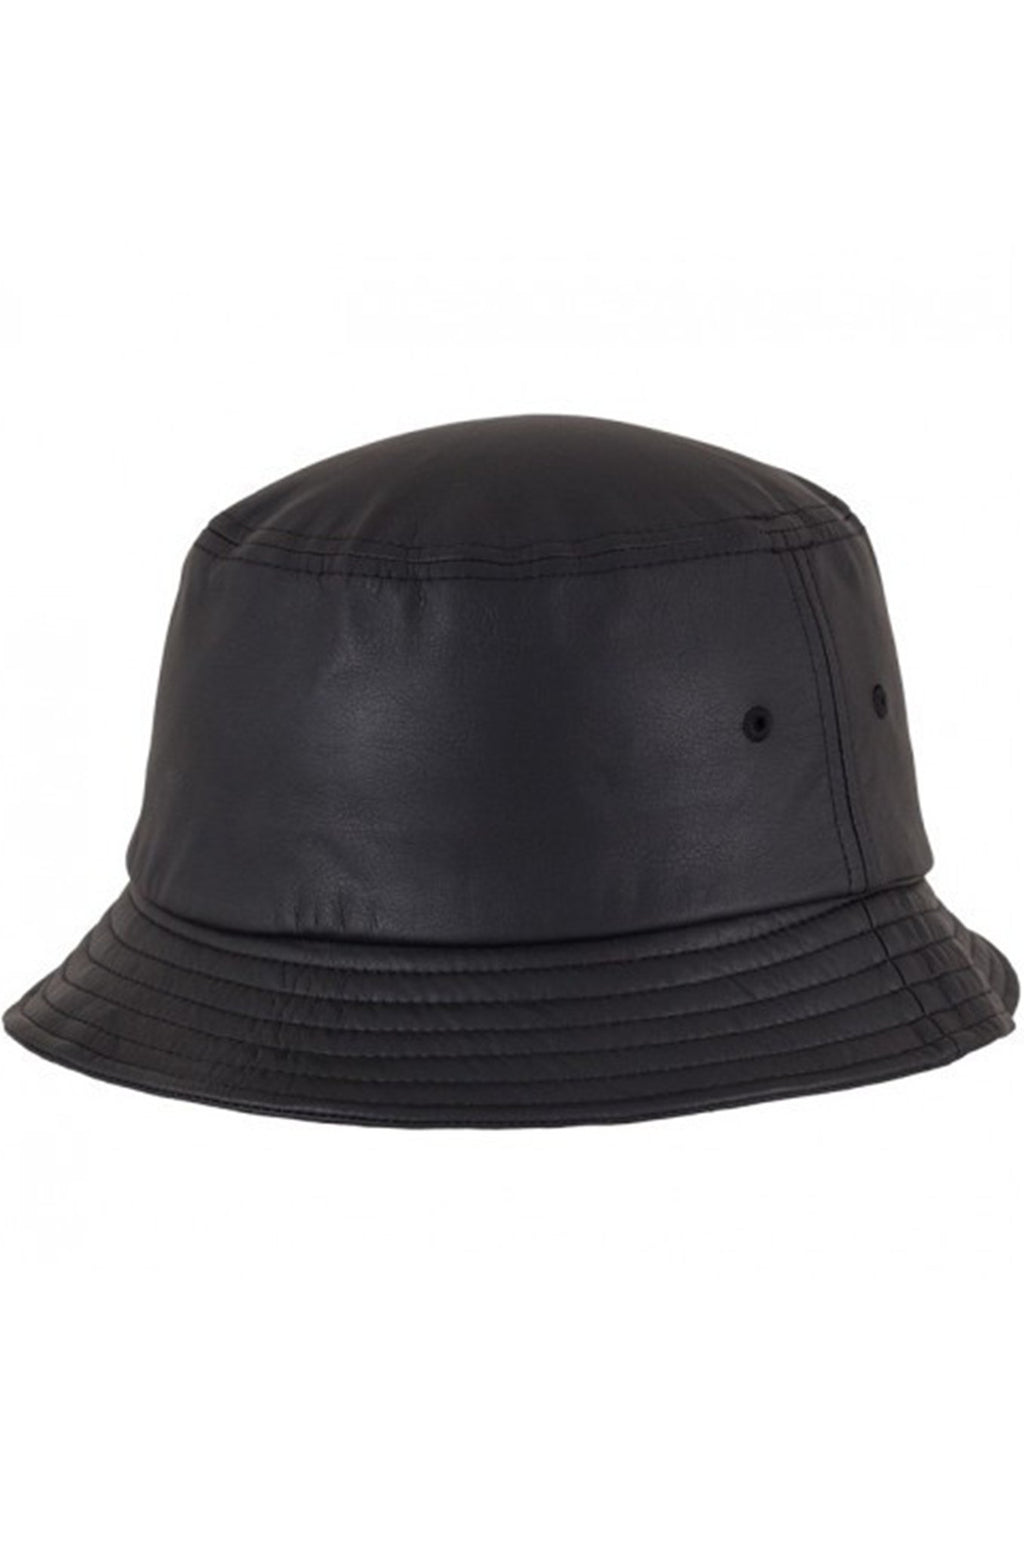 Bucket hat - Faux leather black